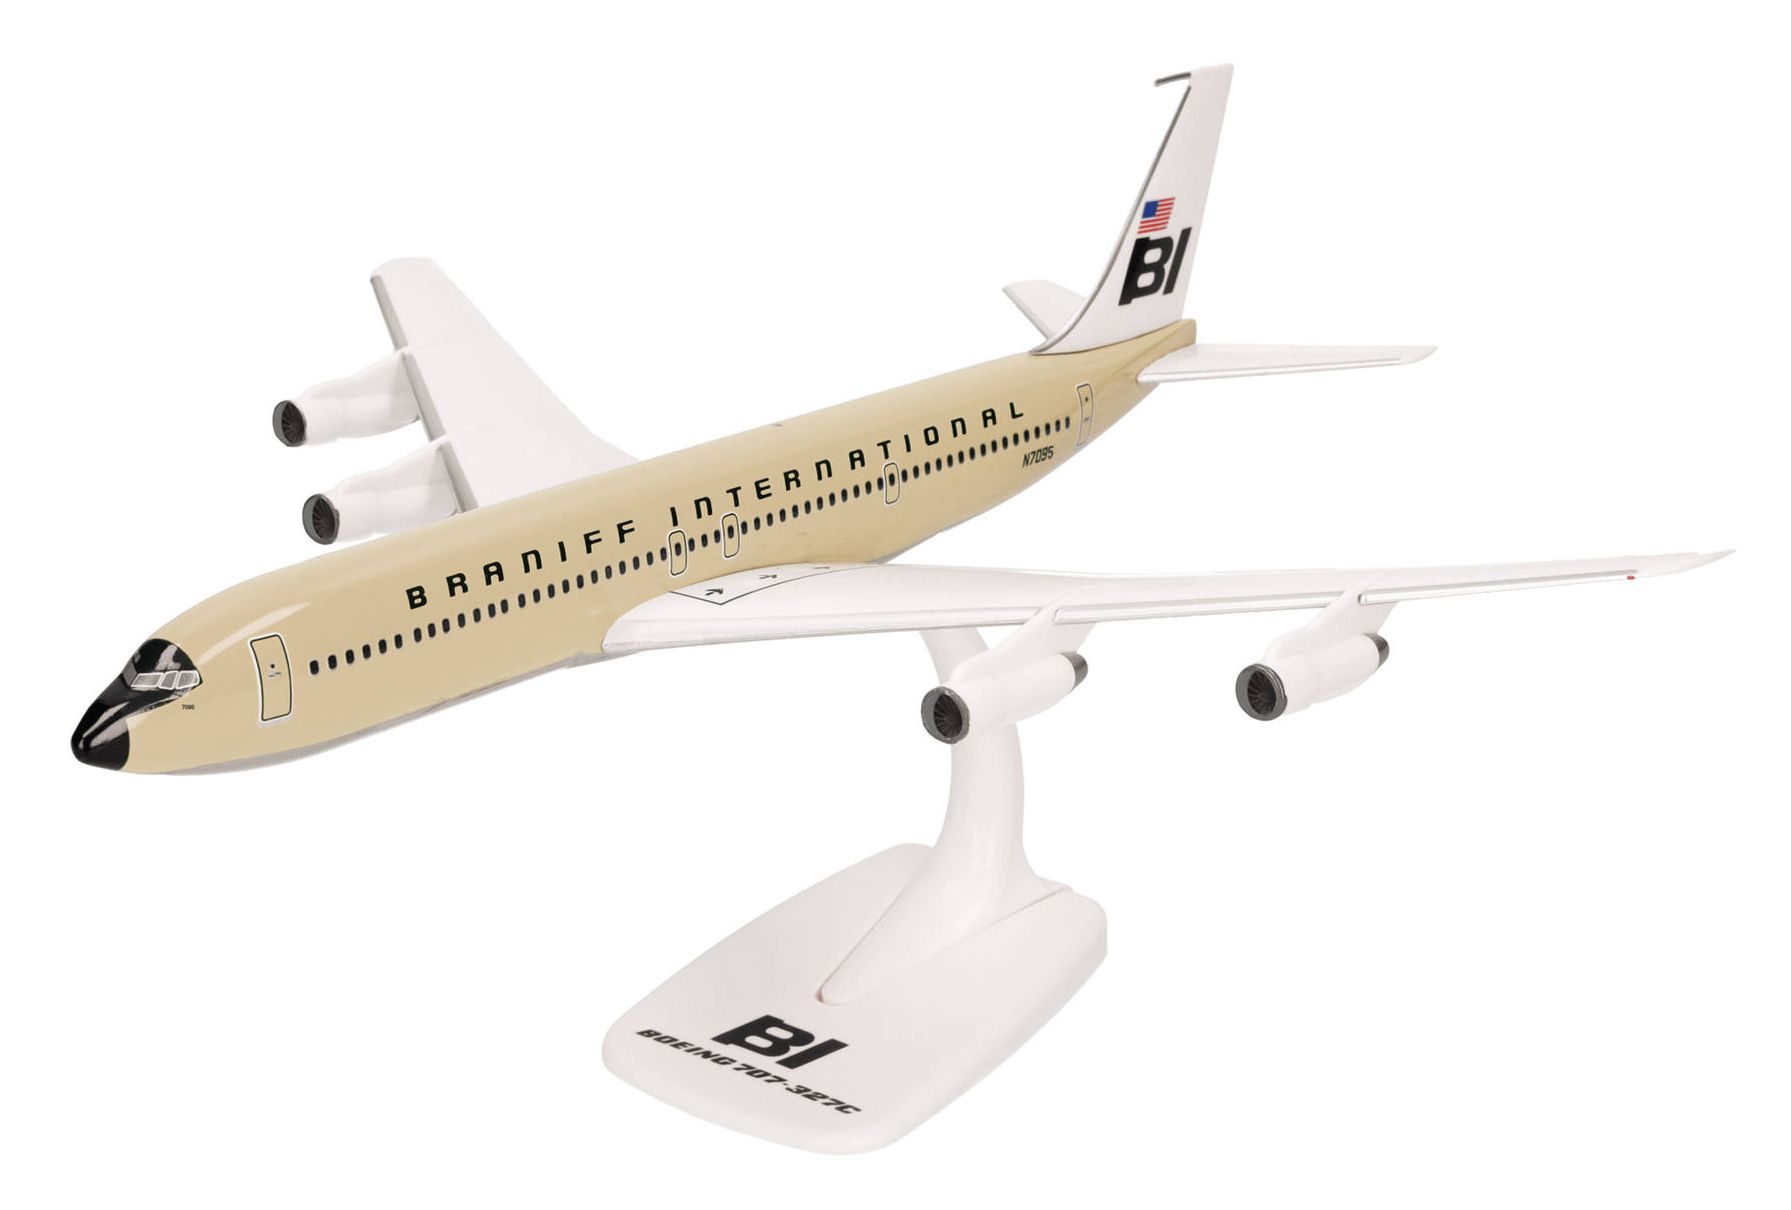 Herpa 614023 - Braniff International Boeing 707-320 - Solid beige